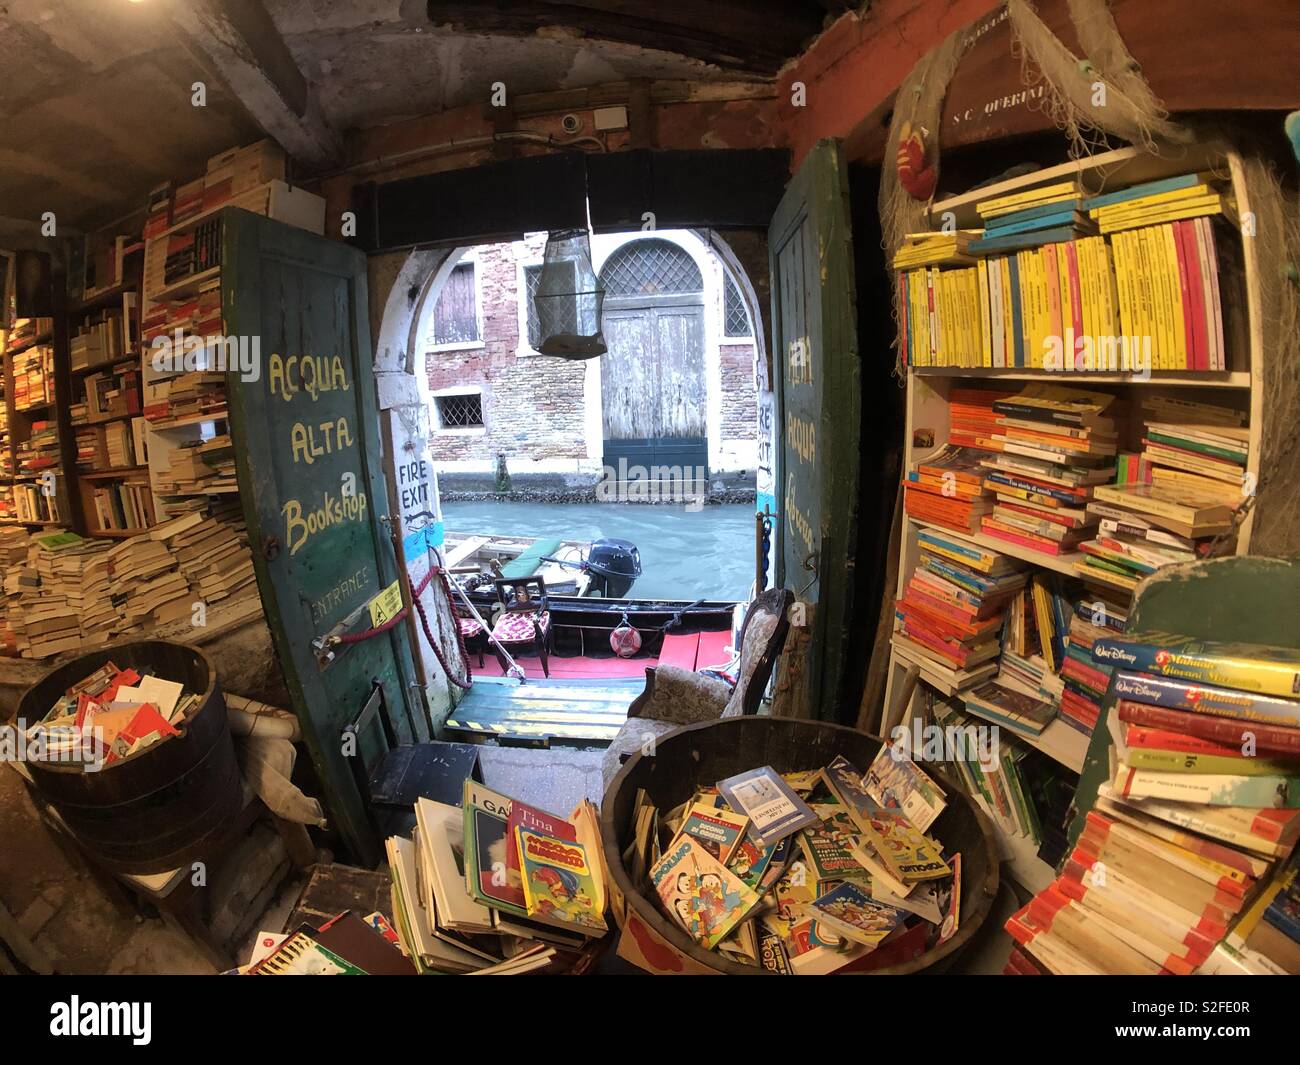 Acqua Alta Bookshop In Venice Stock Photo Alamy